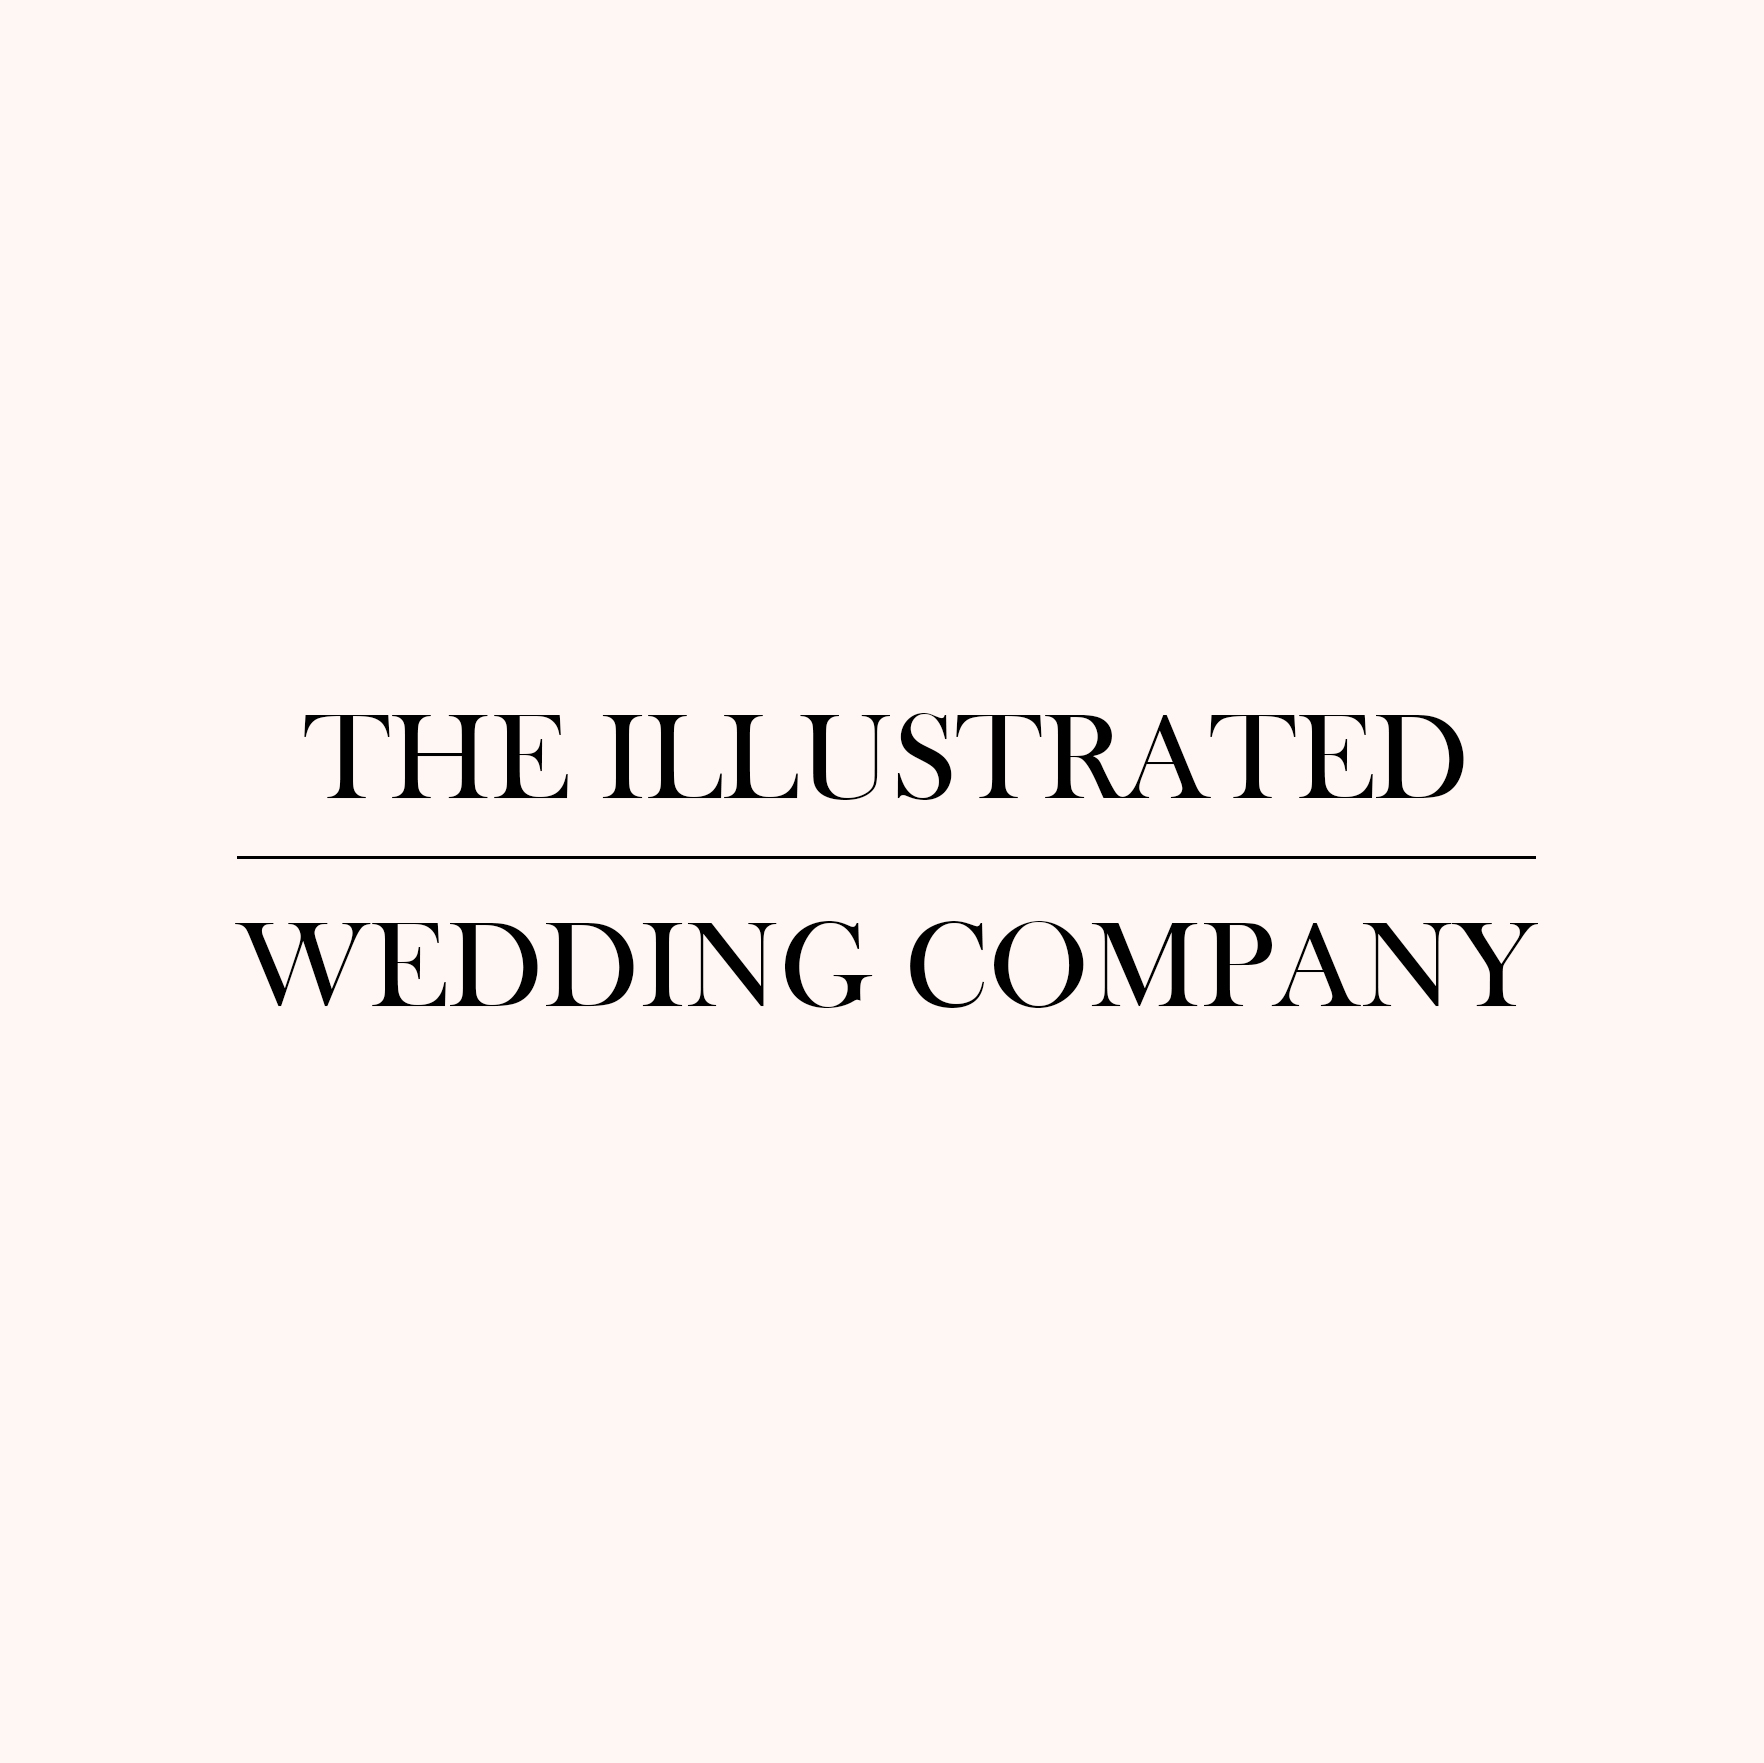 The Illustrated Wedding Company logo